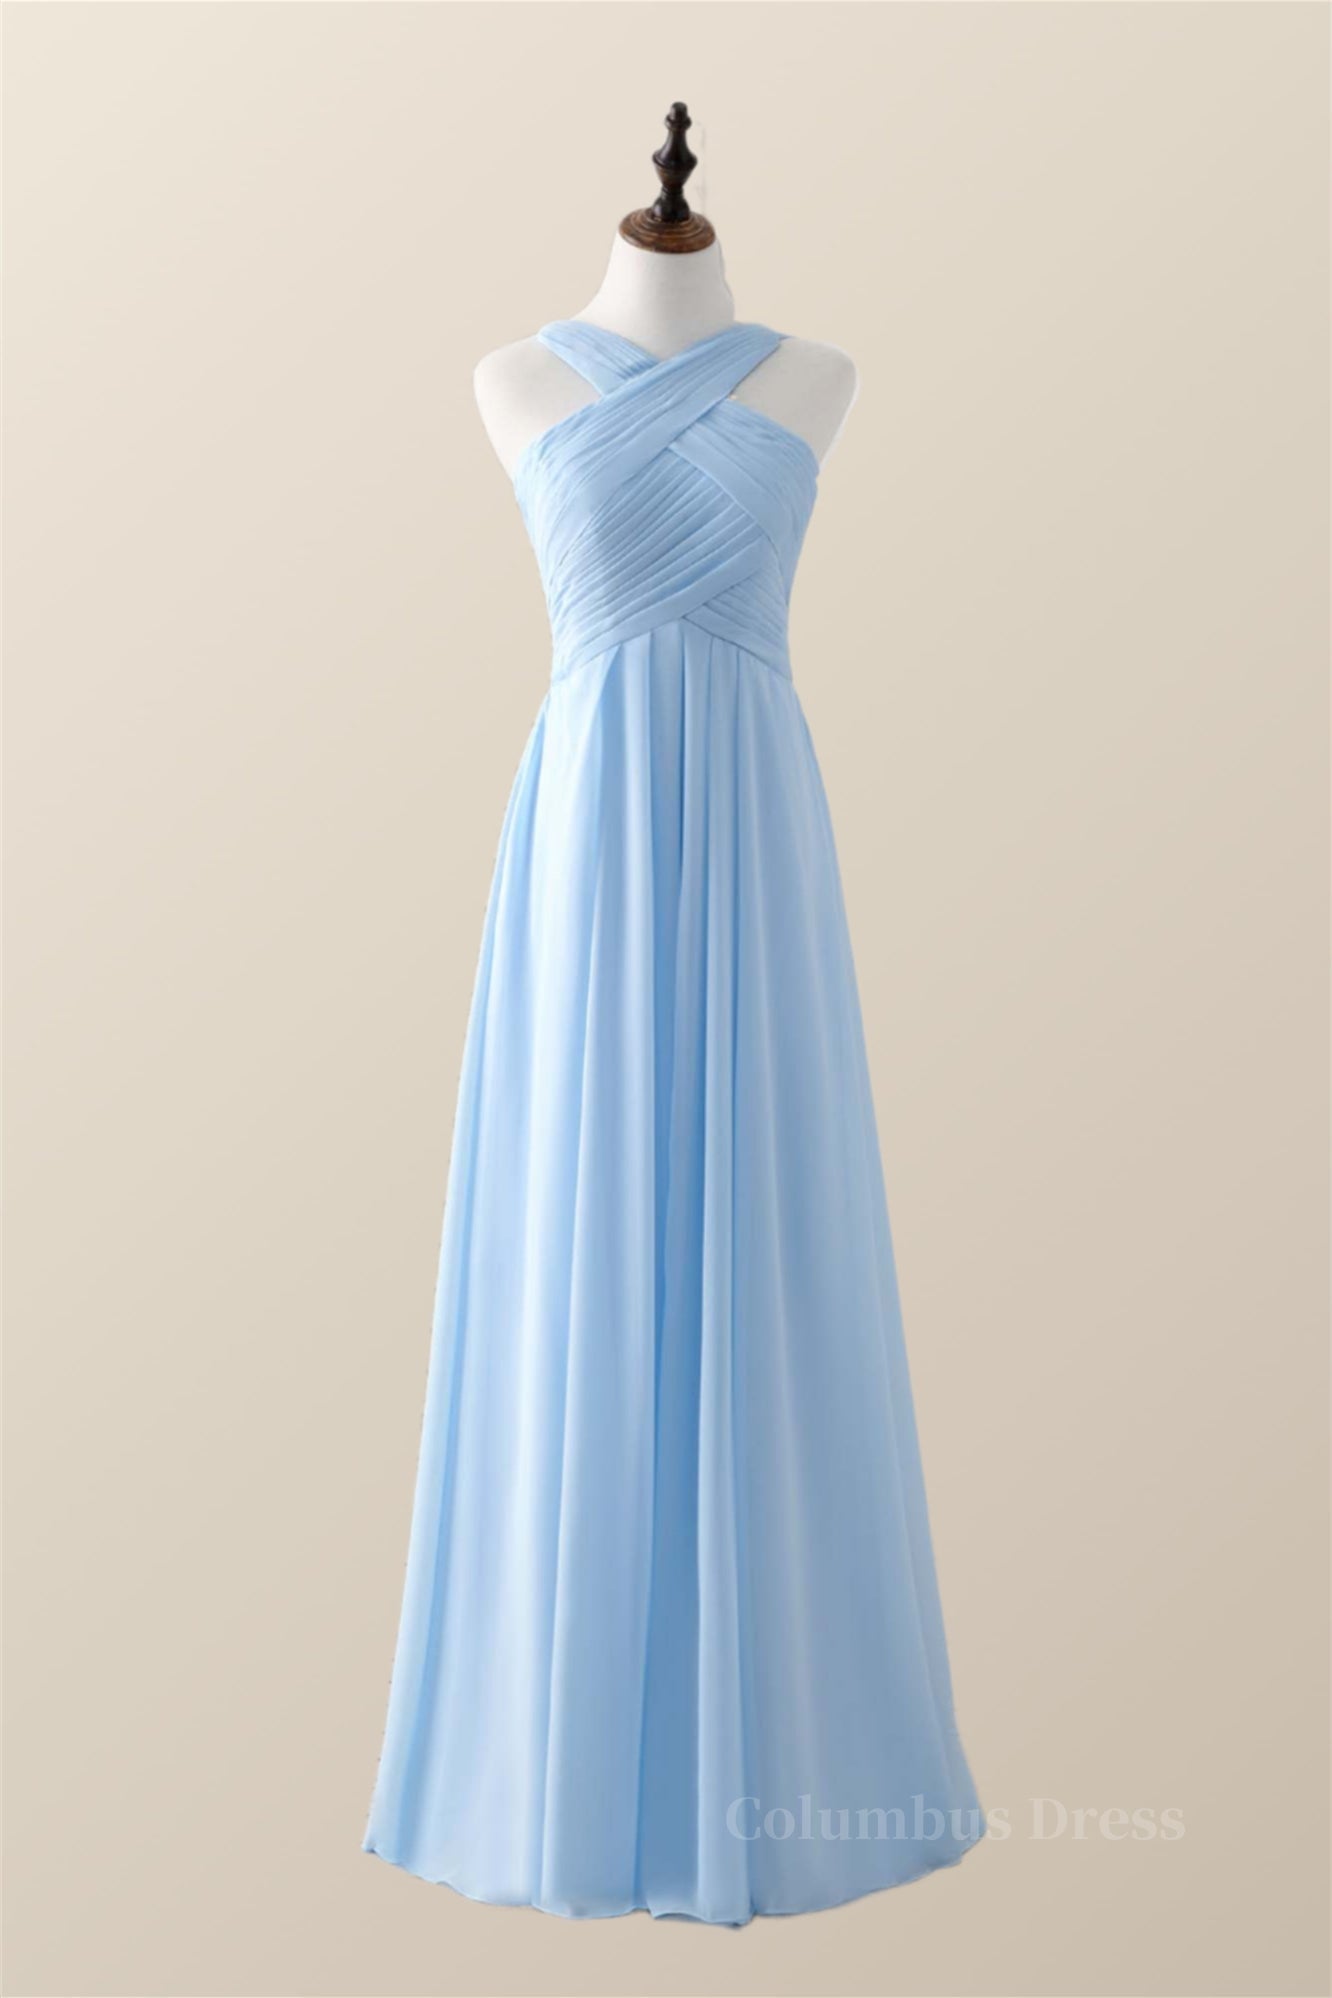 Cross Front Light Sky Blue Chiffon Long Corset Bridesmaid Dress outfit, Homecoming Dresses Short Tight